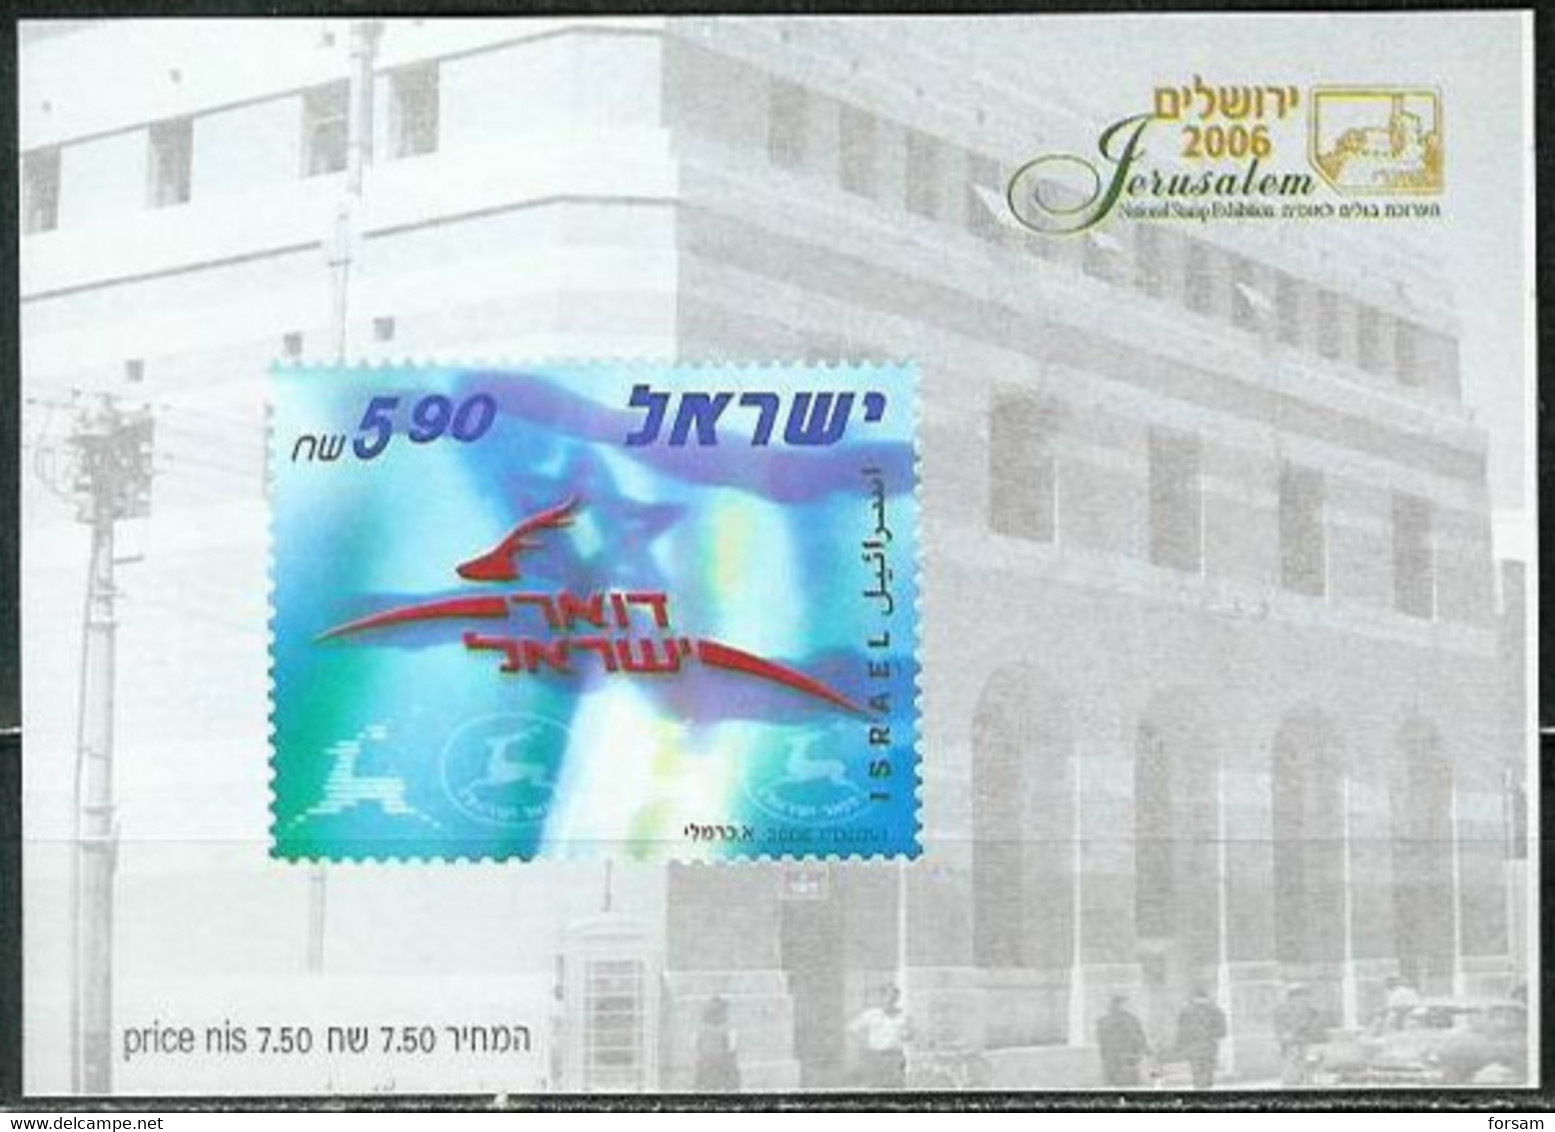 ISRAEL..2006..Michel # Block 71 (# 1860)...MNH...MiCV - 4.50 Euro. - Neufs (avec Tabs)